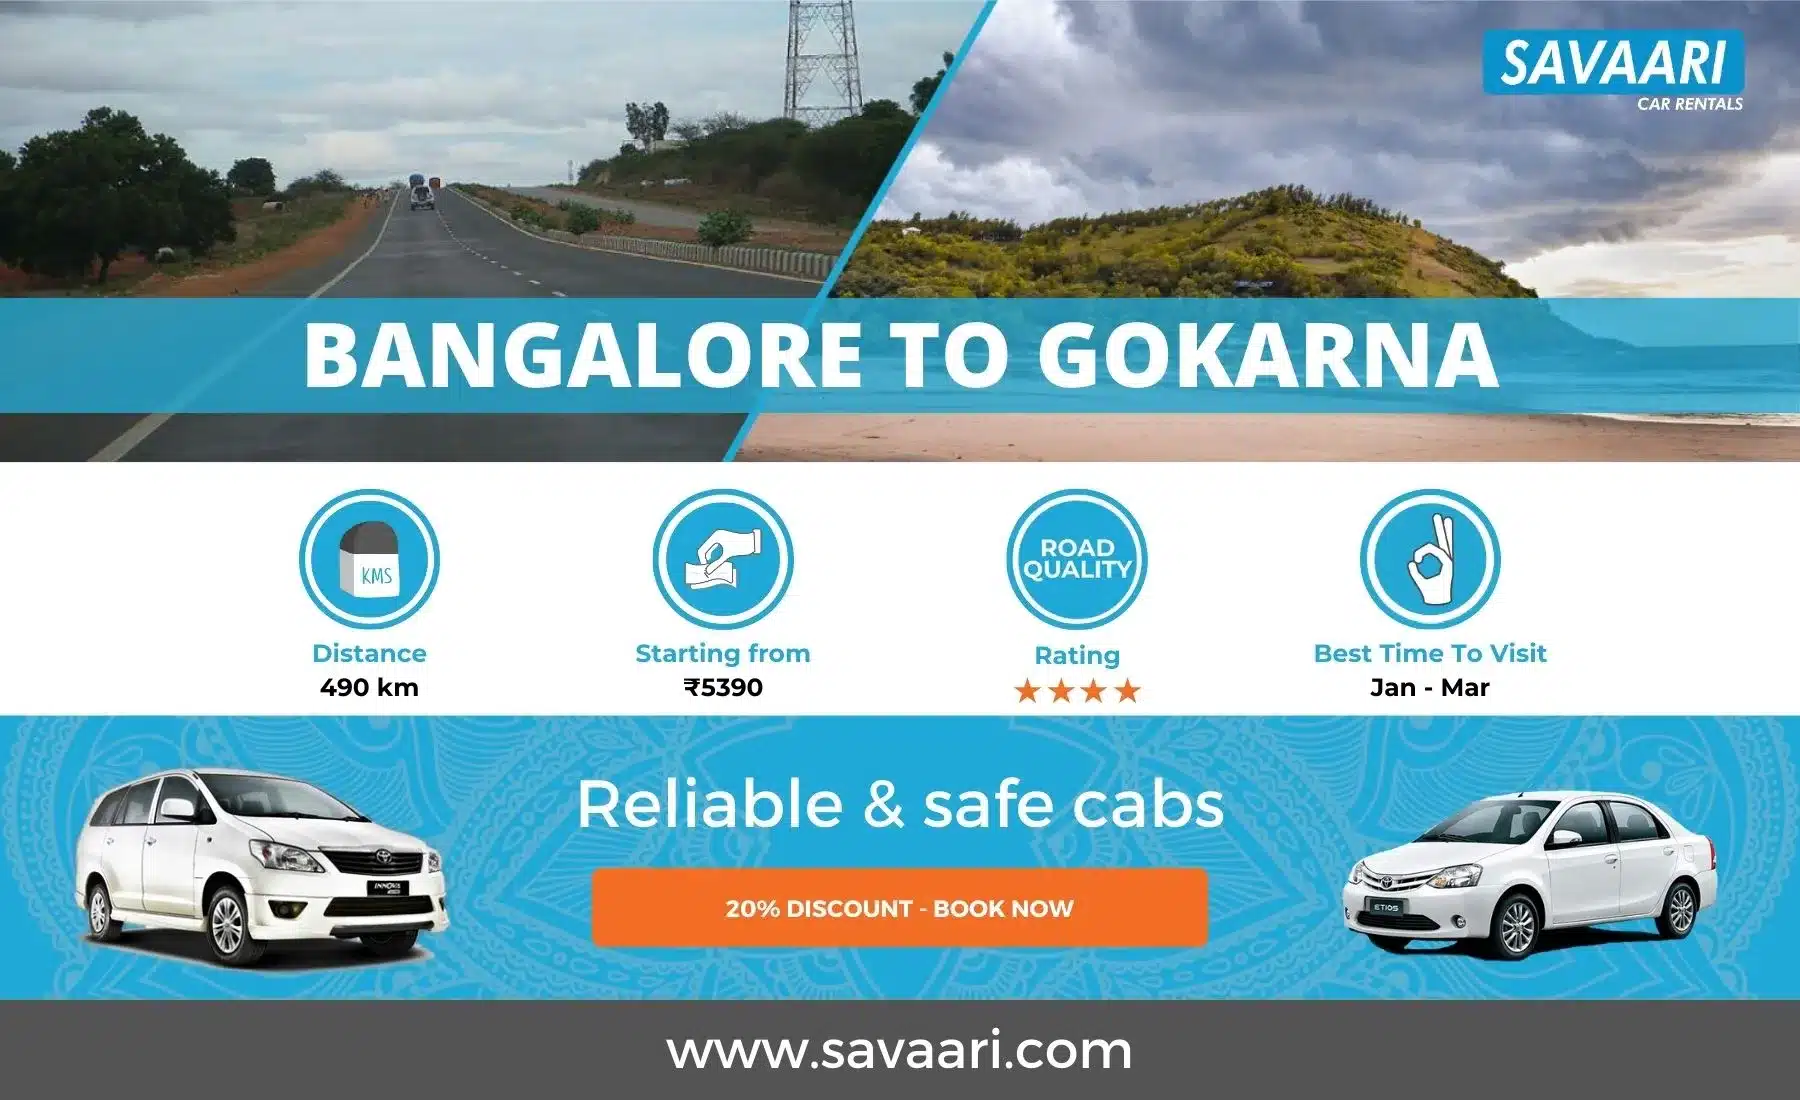 Bangalore to Gokarna by road information